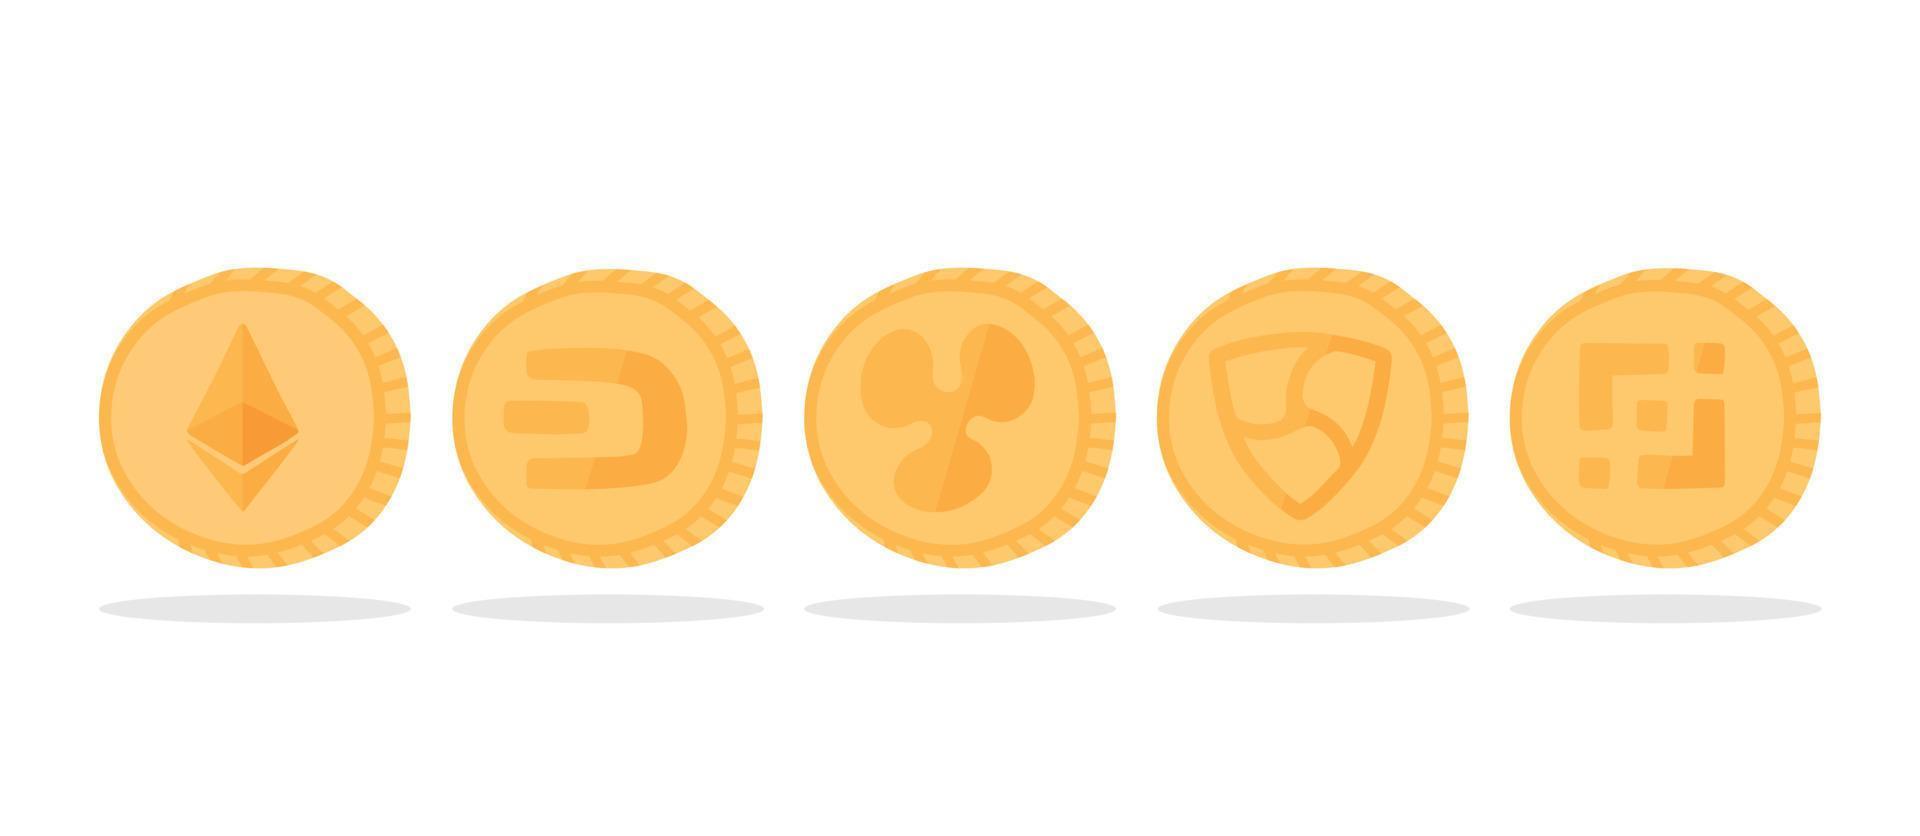 un ensemble de logos de crypto-monnaie - ethereum, ripple, dash, nem, binance coin. pièces d'or avec un symbole de crypto-monnaie. vecteur